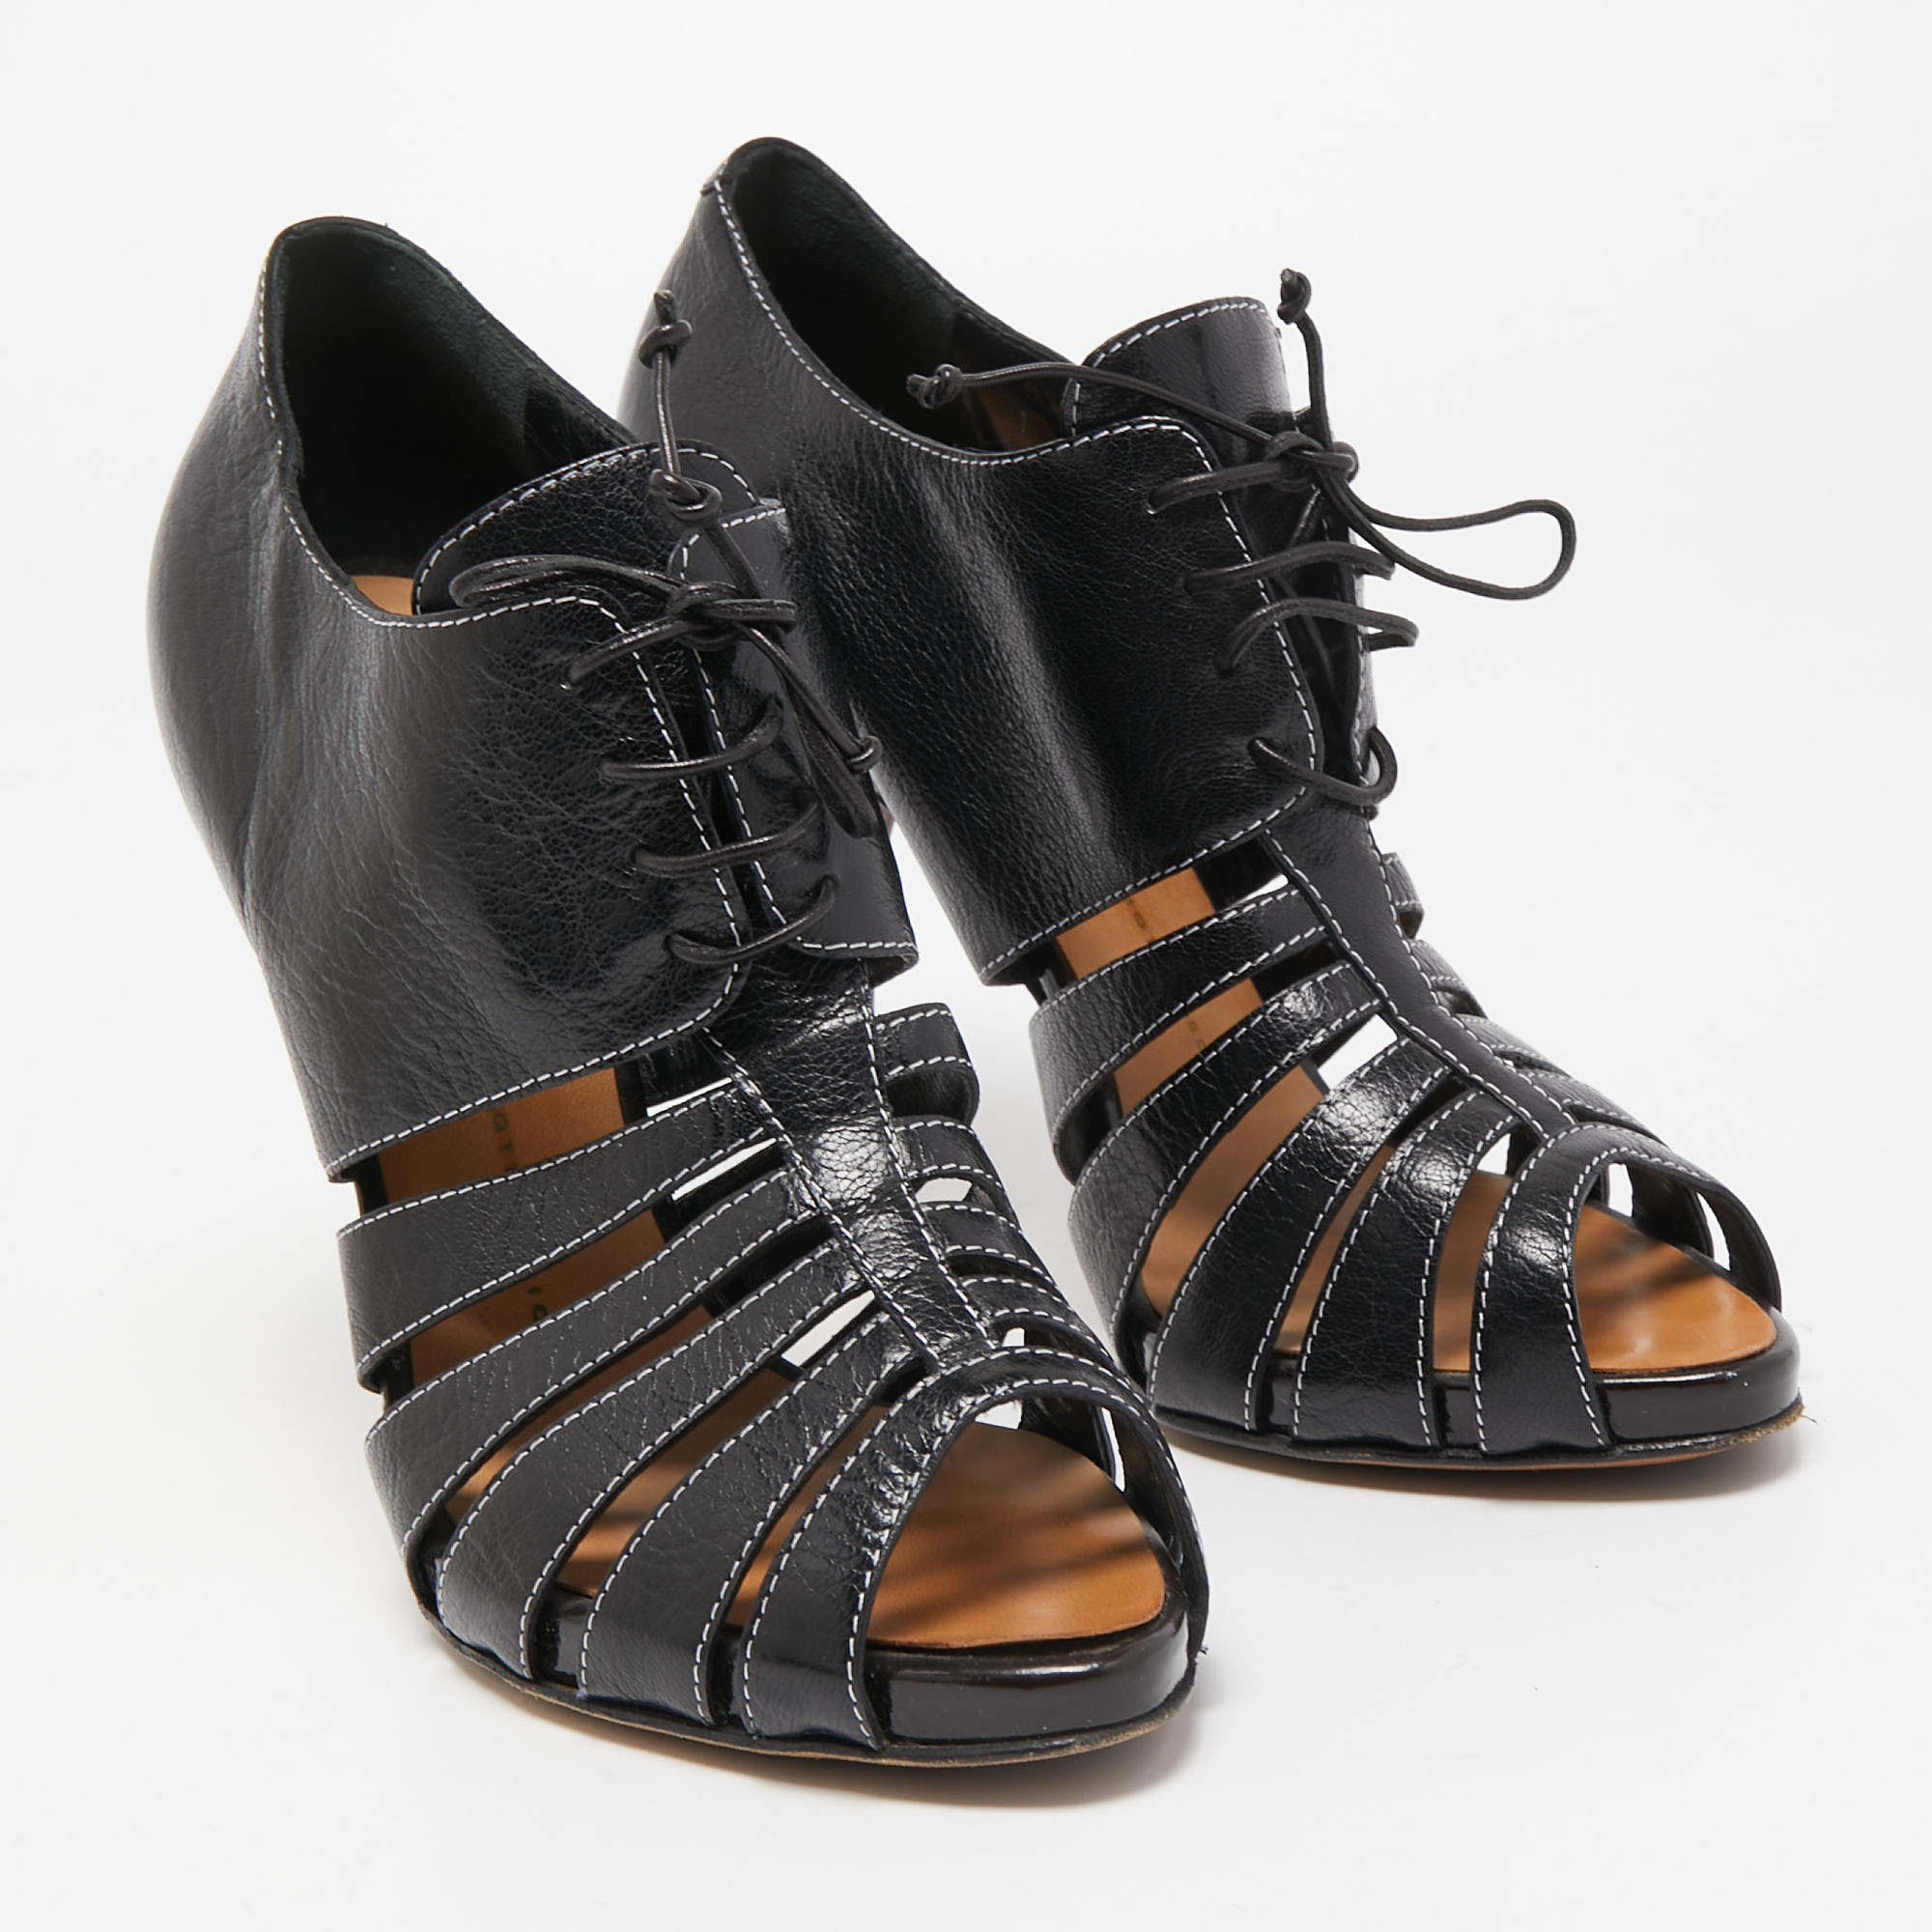 Giuseppe Zanotti Black Leather Oxford Peep Toe Ankle Boots Size 39.5